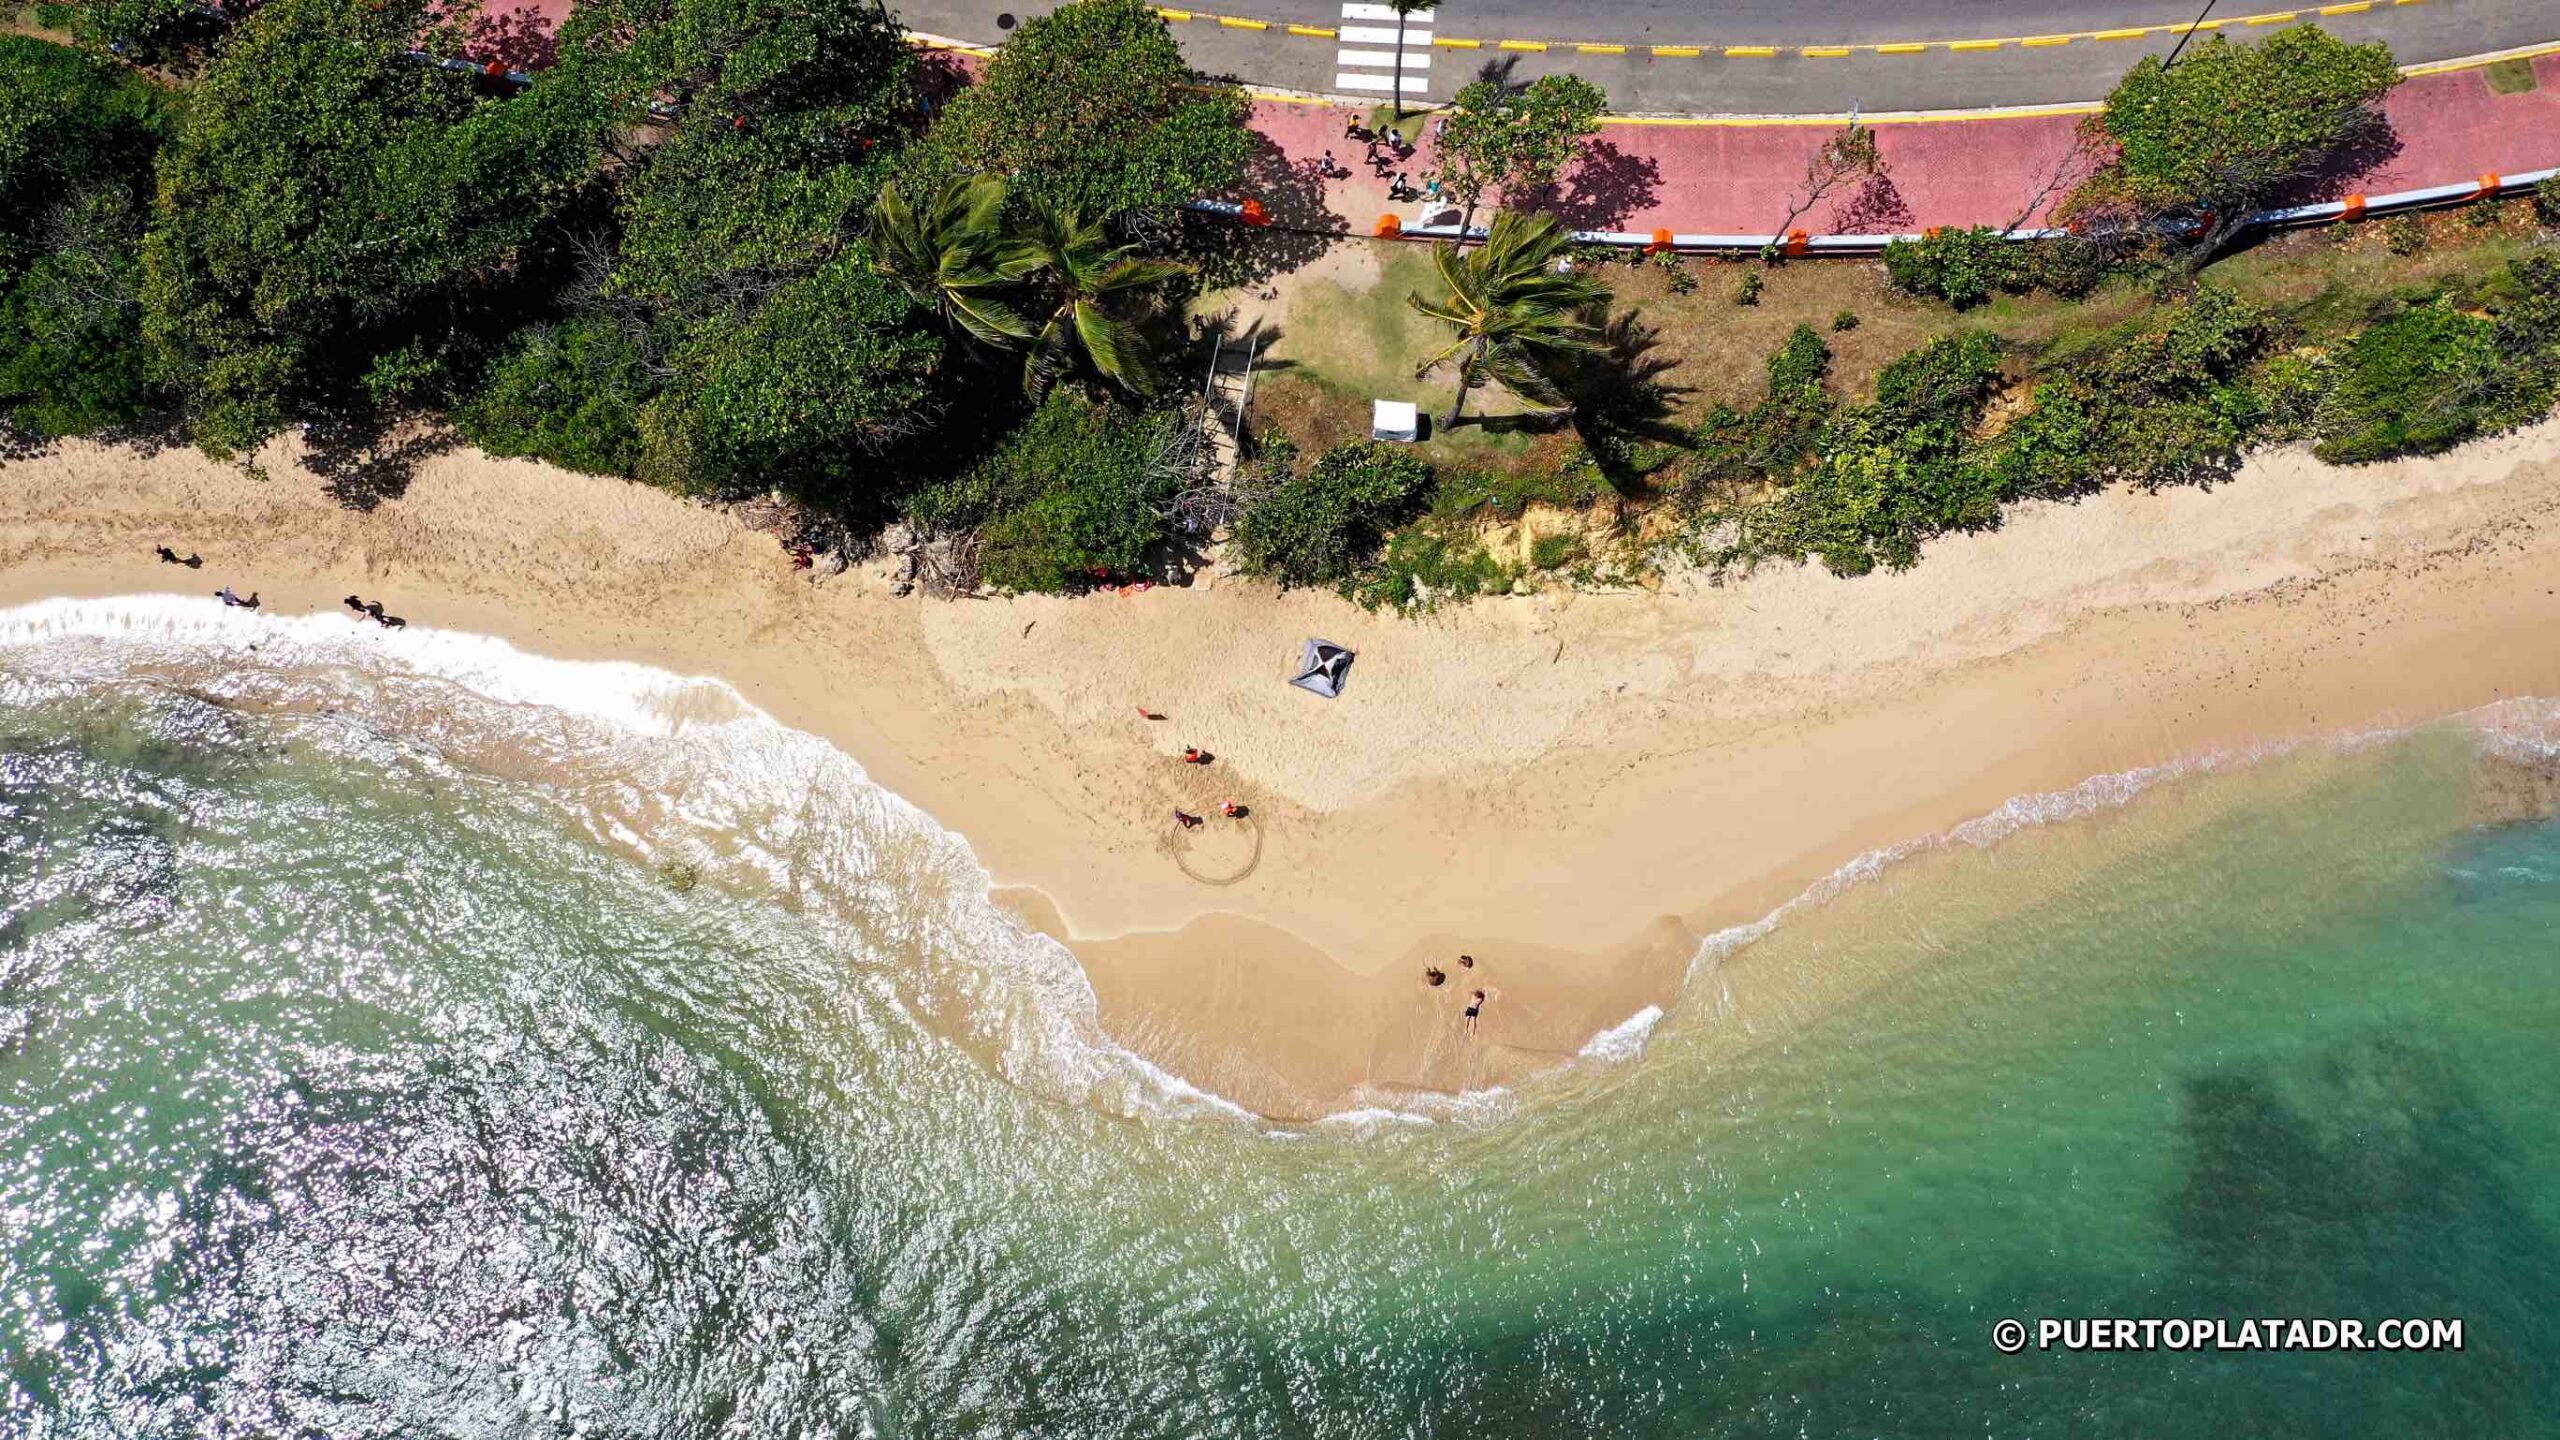 View of Acapulco Beach in Puerto Plata